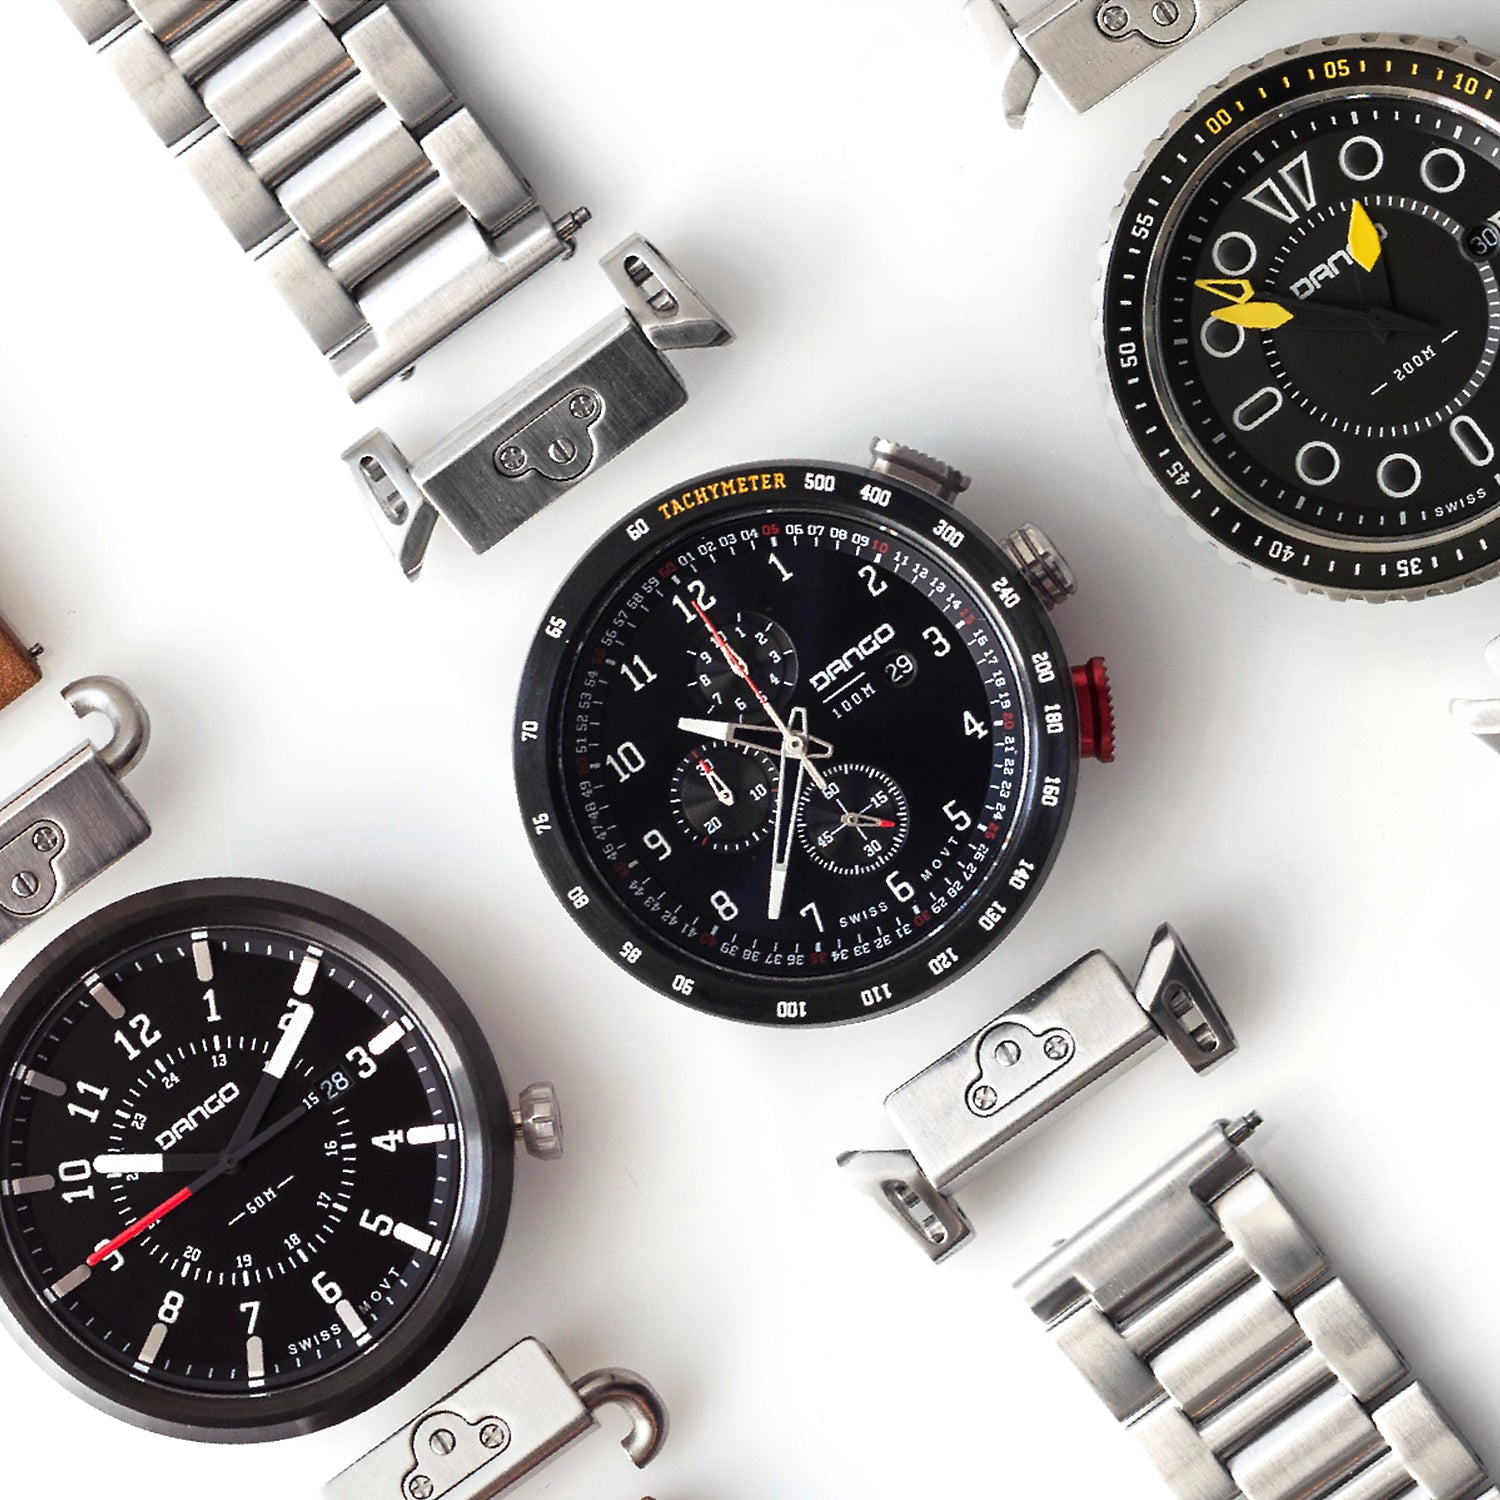 Dango Modular Watches are live on Kickstarter!